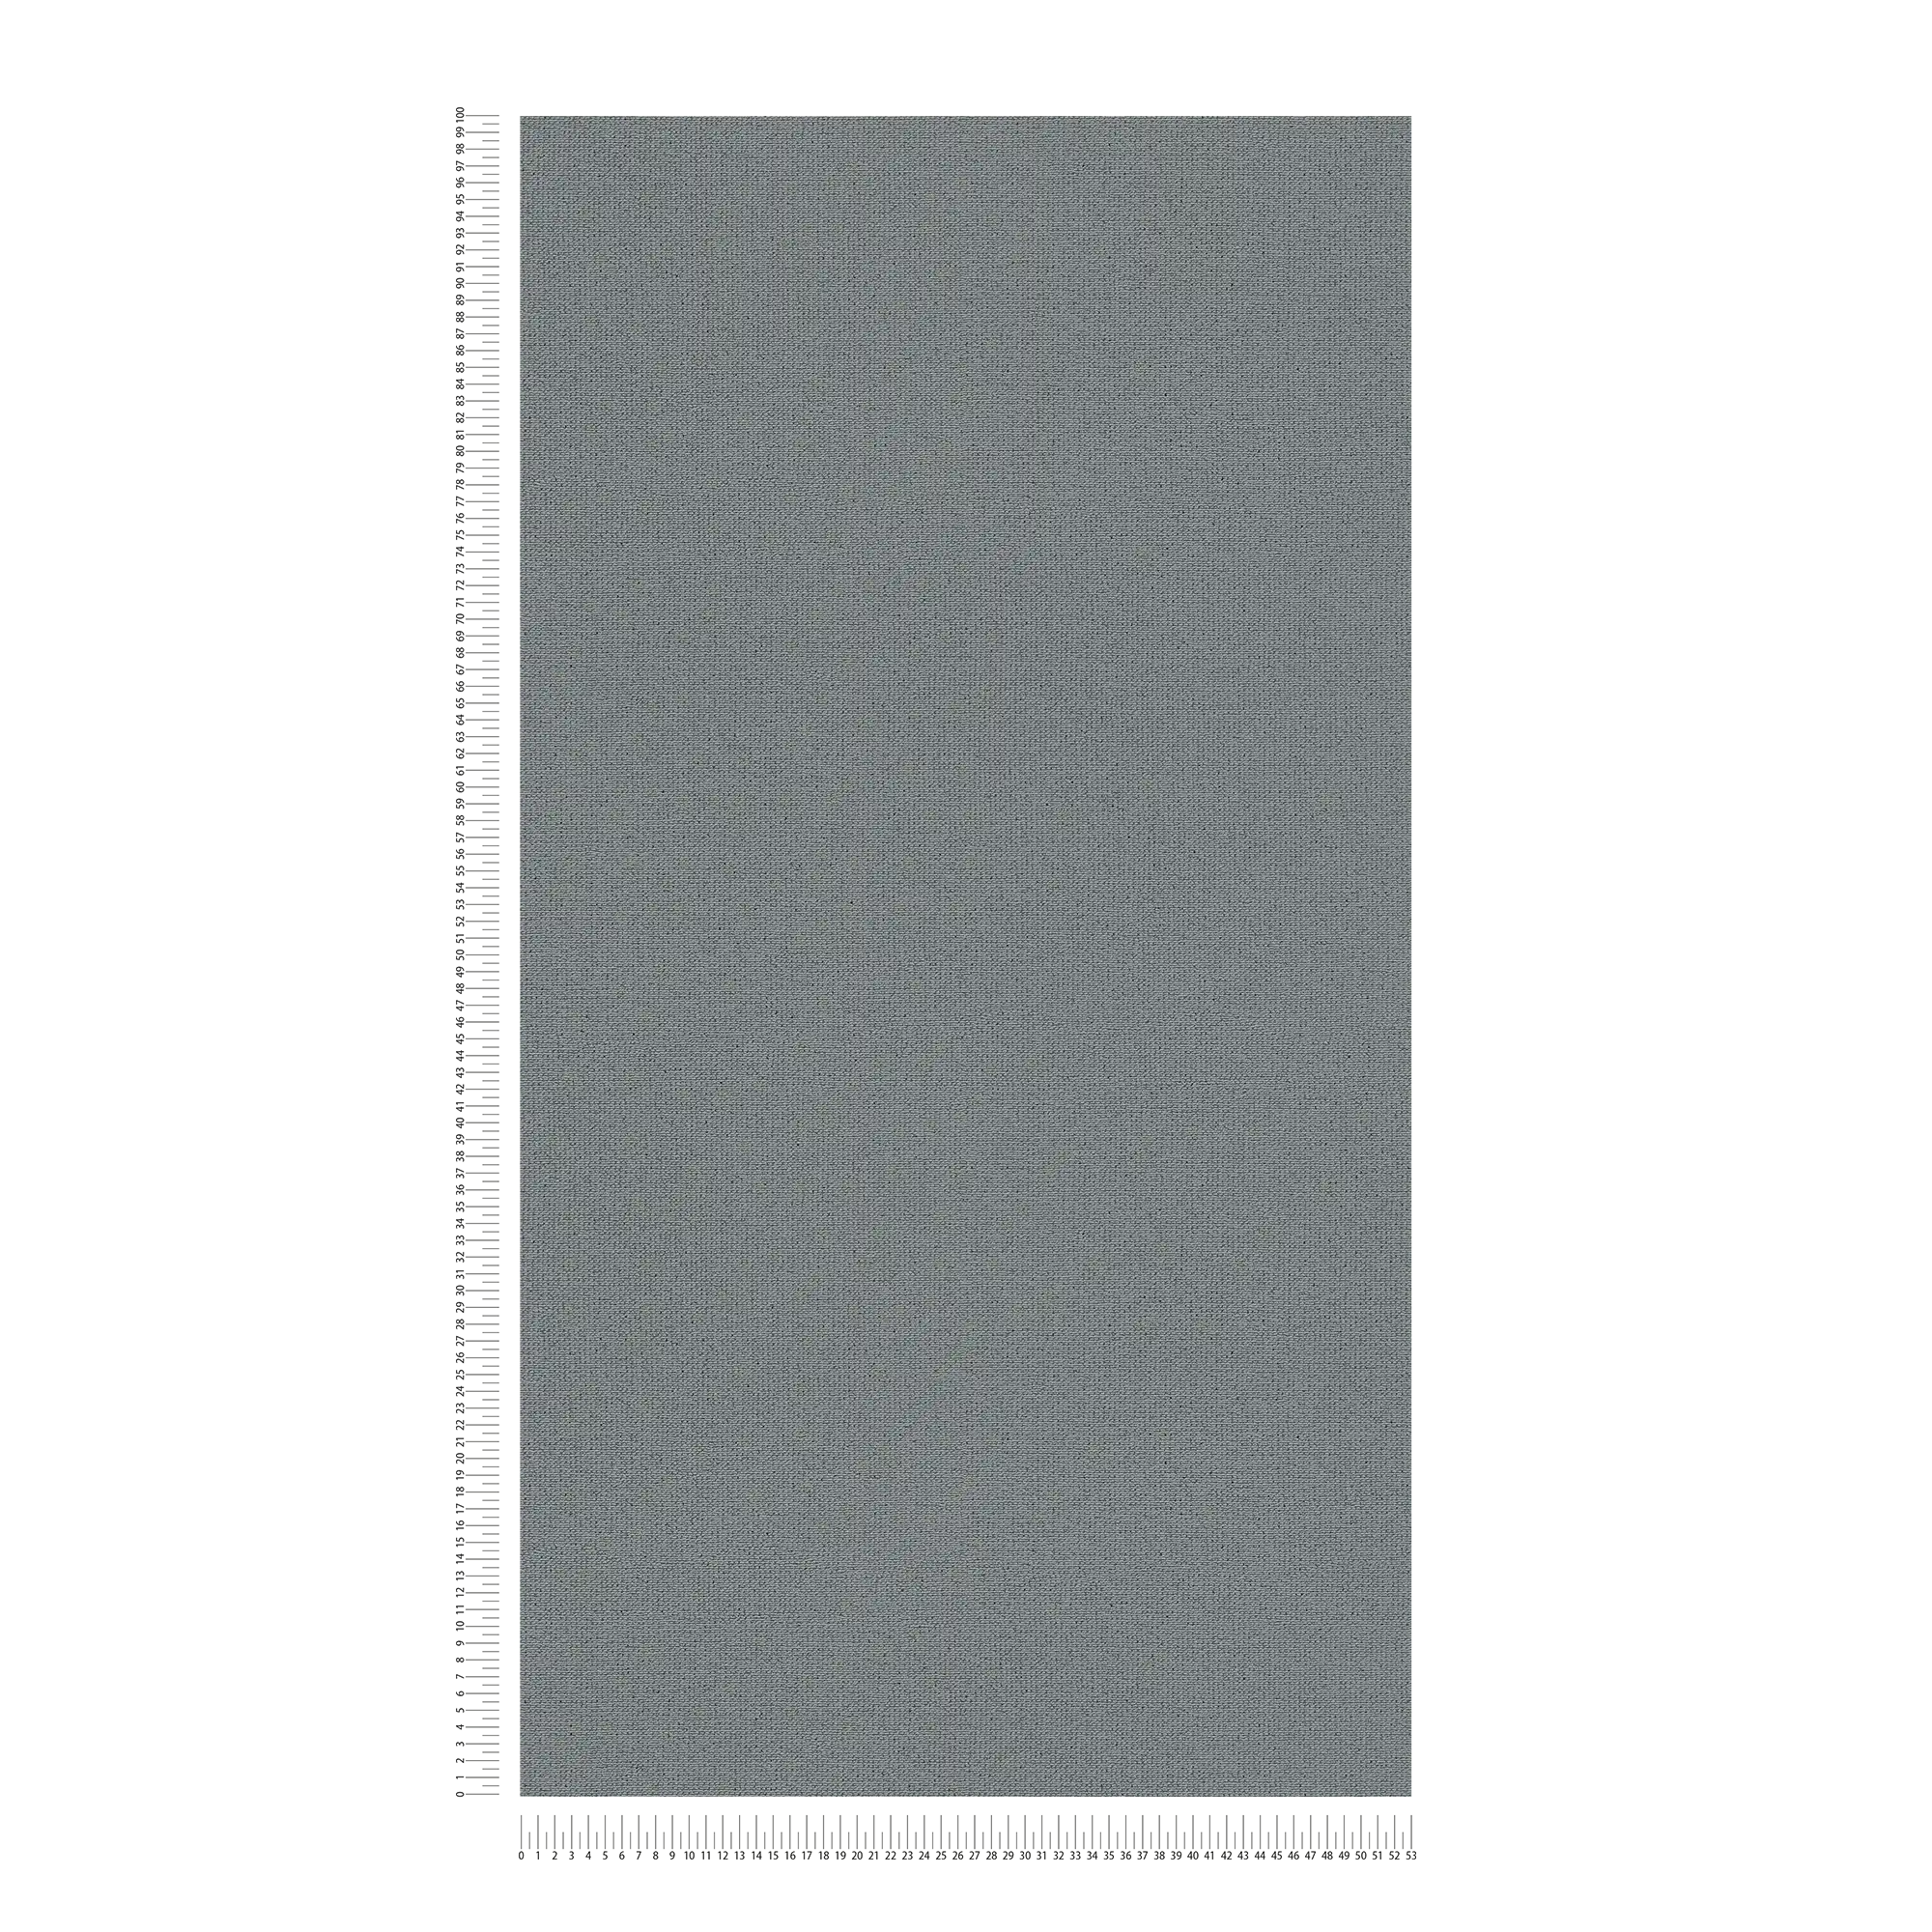             Plain Scandi wallpaper in matt and linen structure - dark grey
        